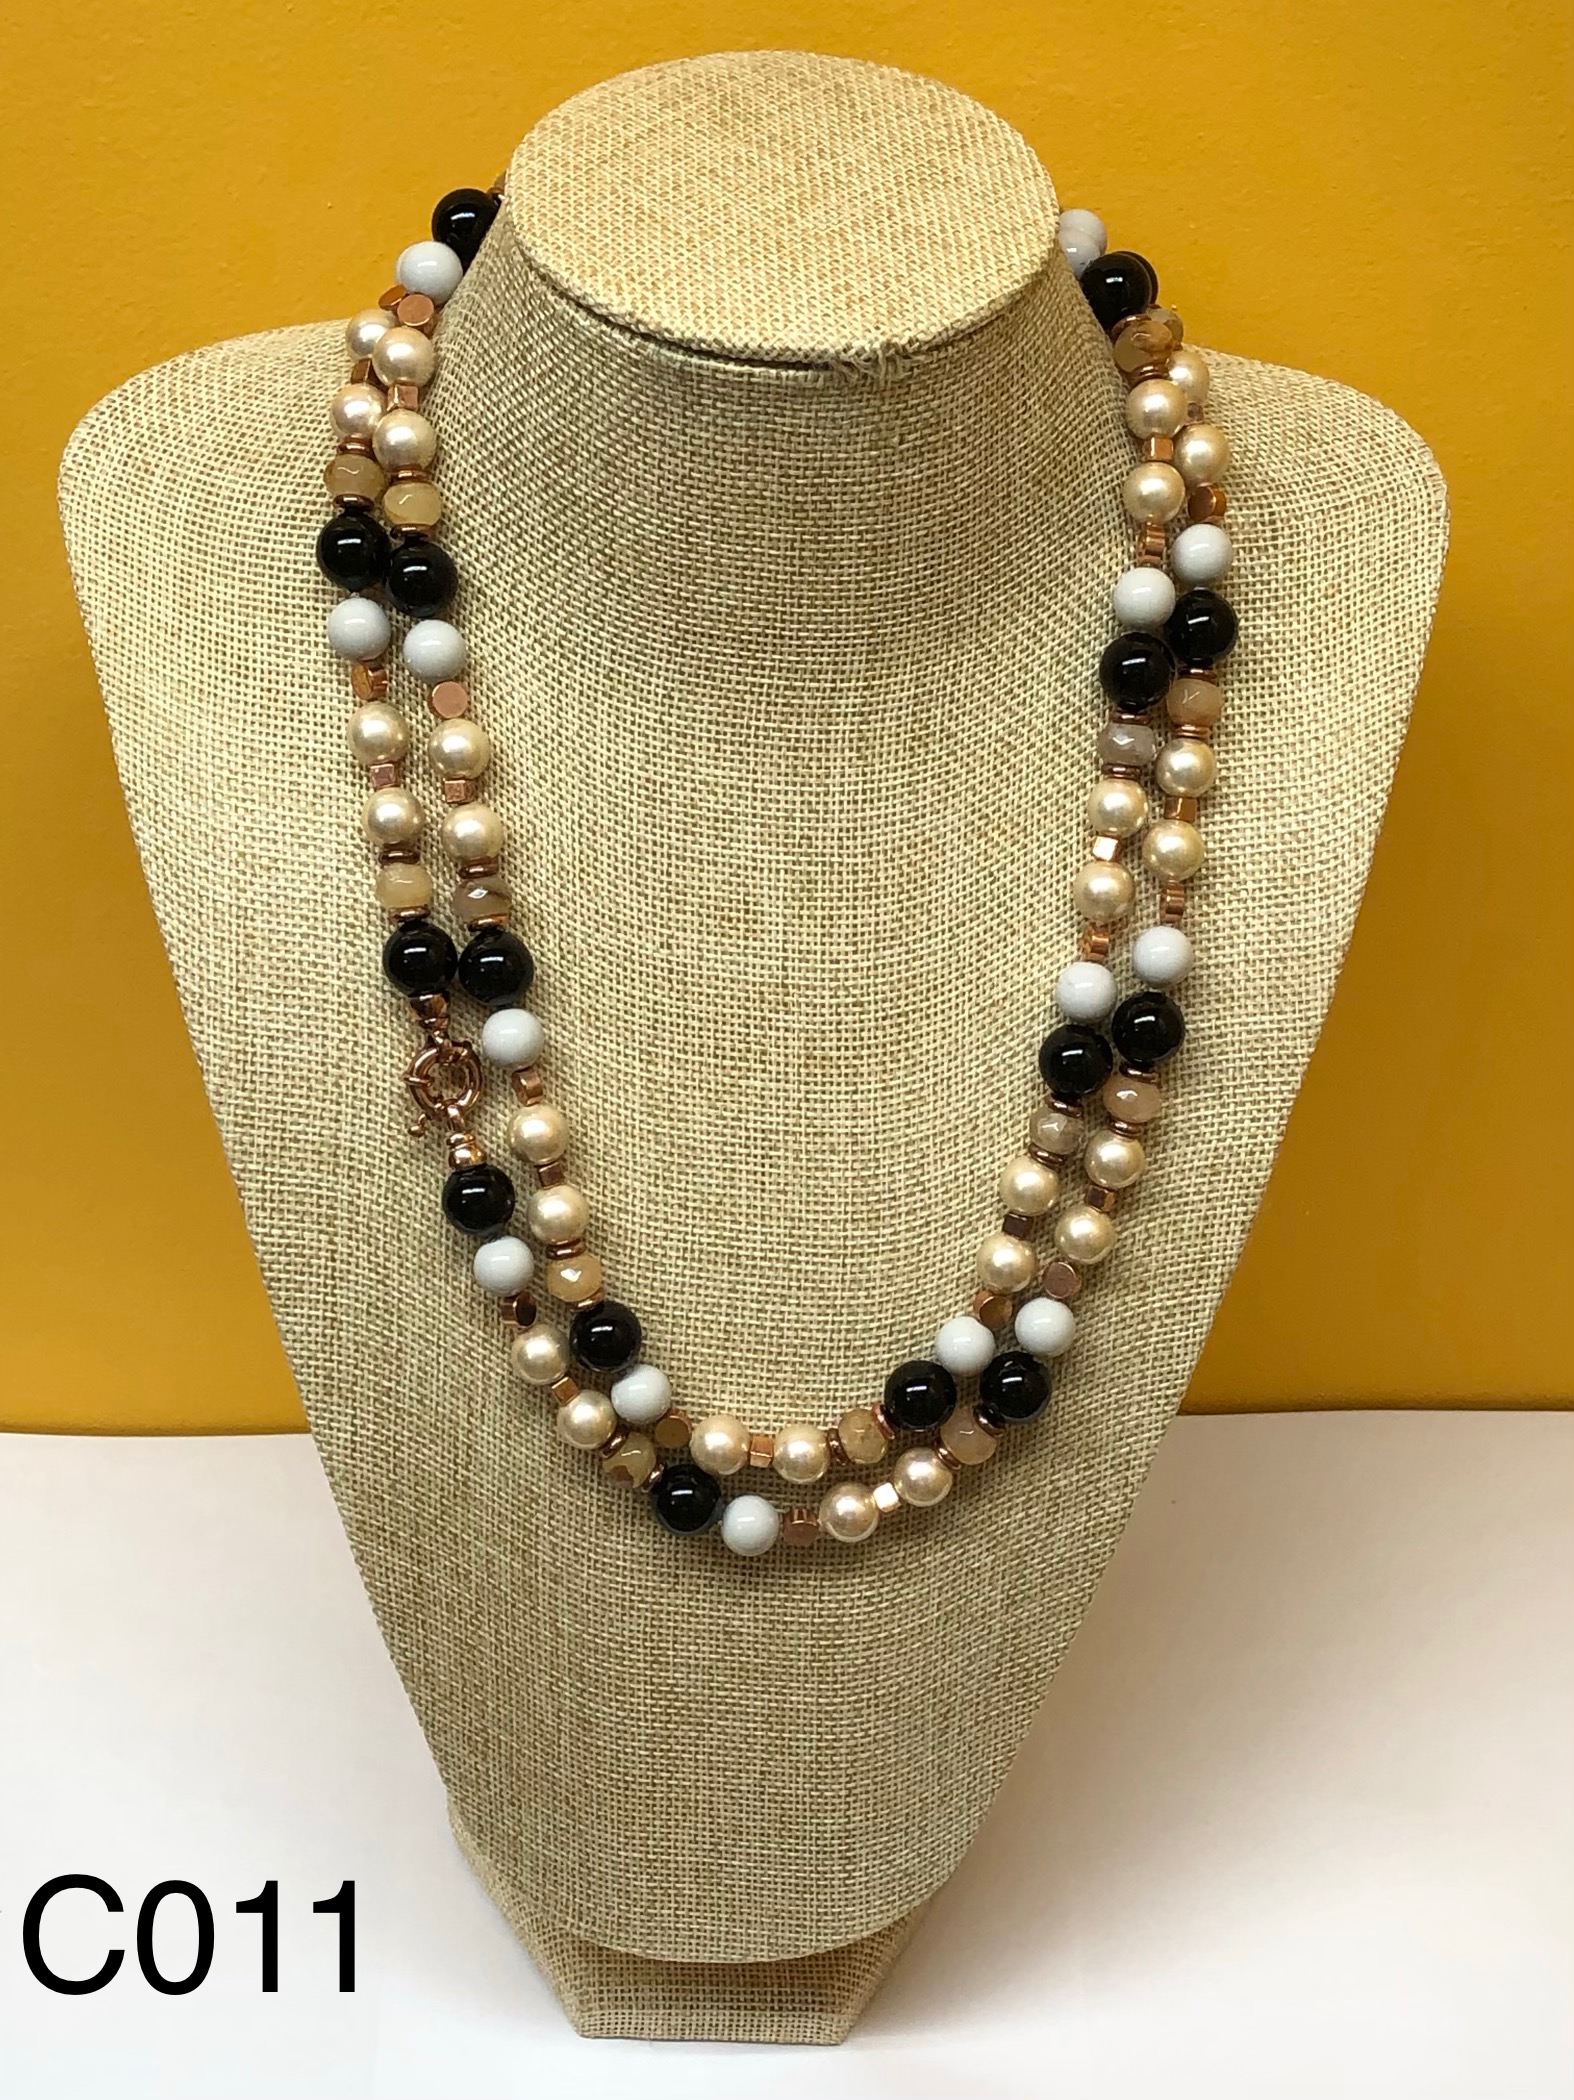 Majorca pearl necklace - Item # 13079